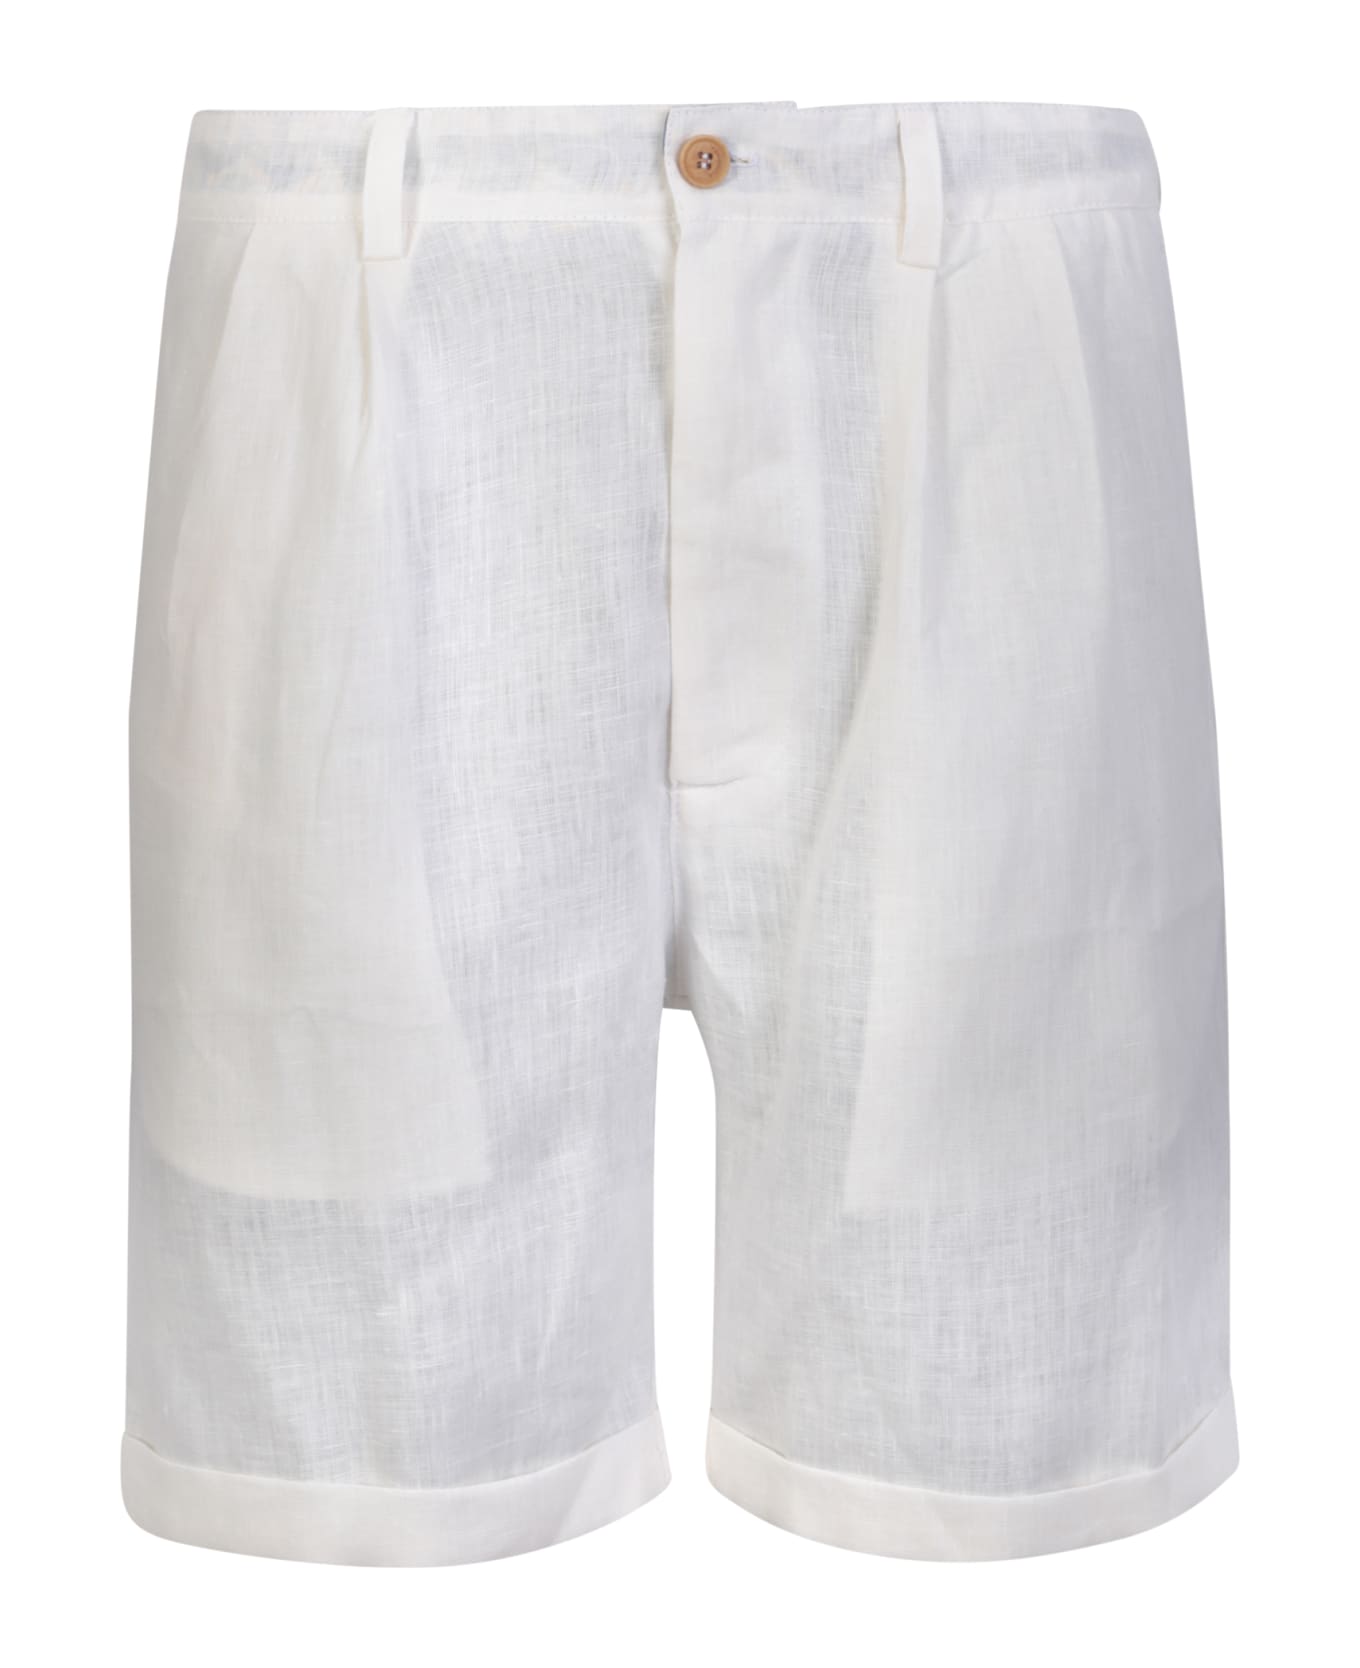 Peninsula Swimwear Marzamemi Linen White Shorts - White